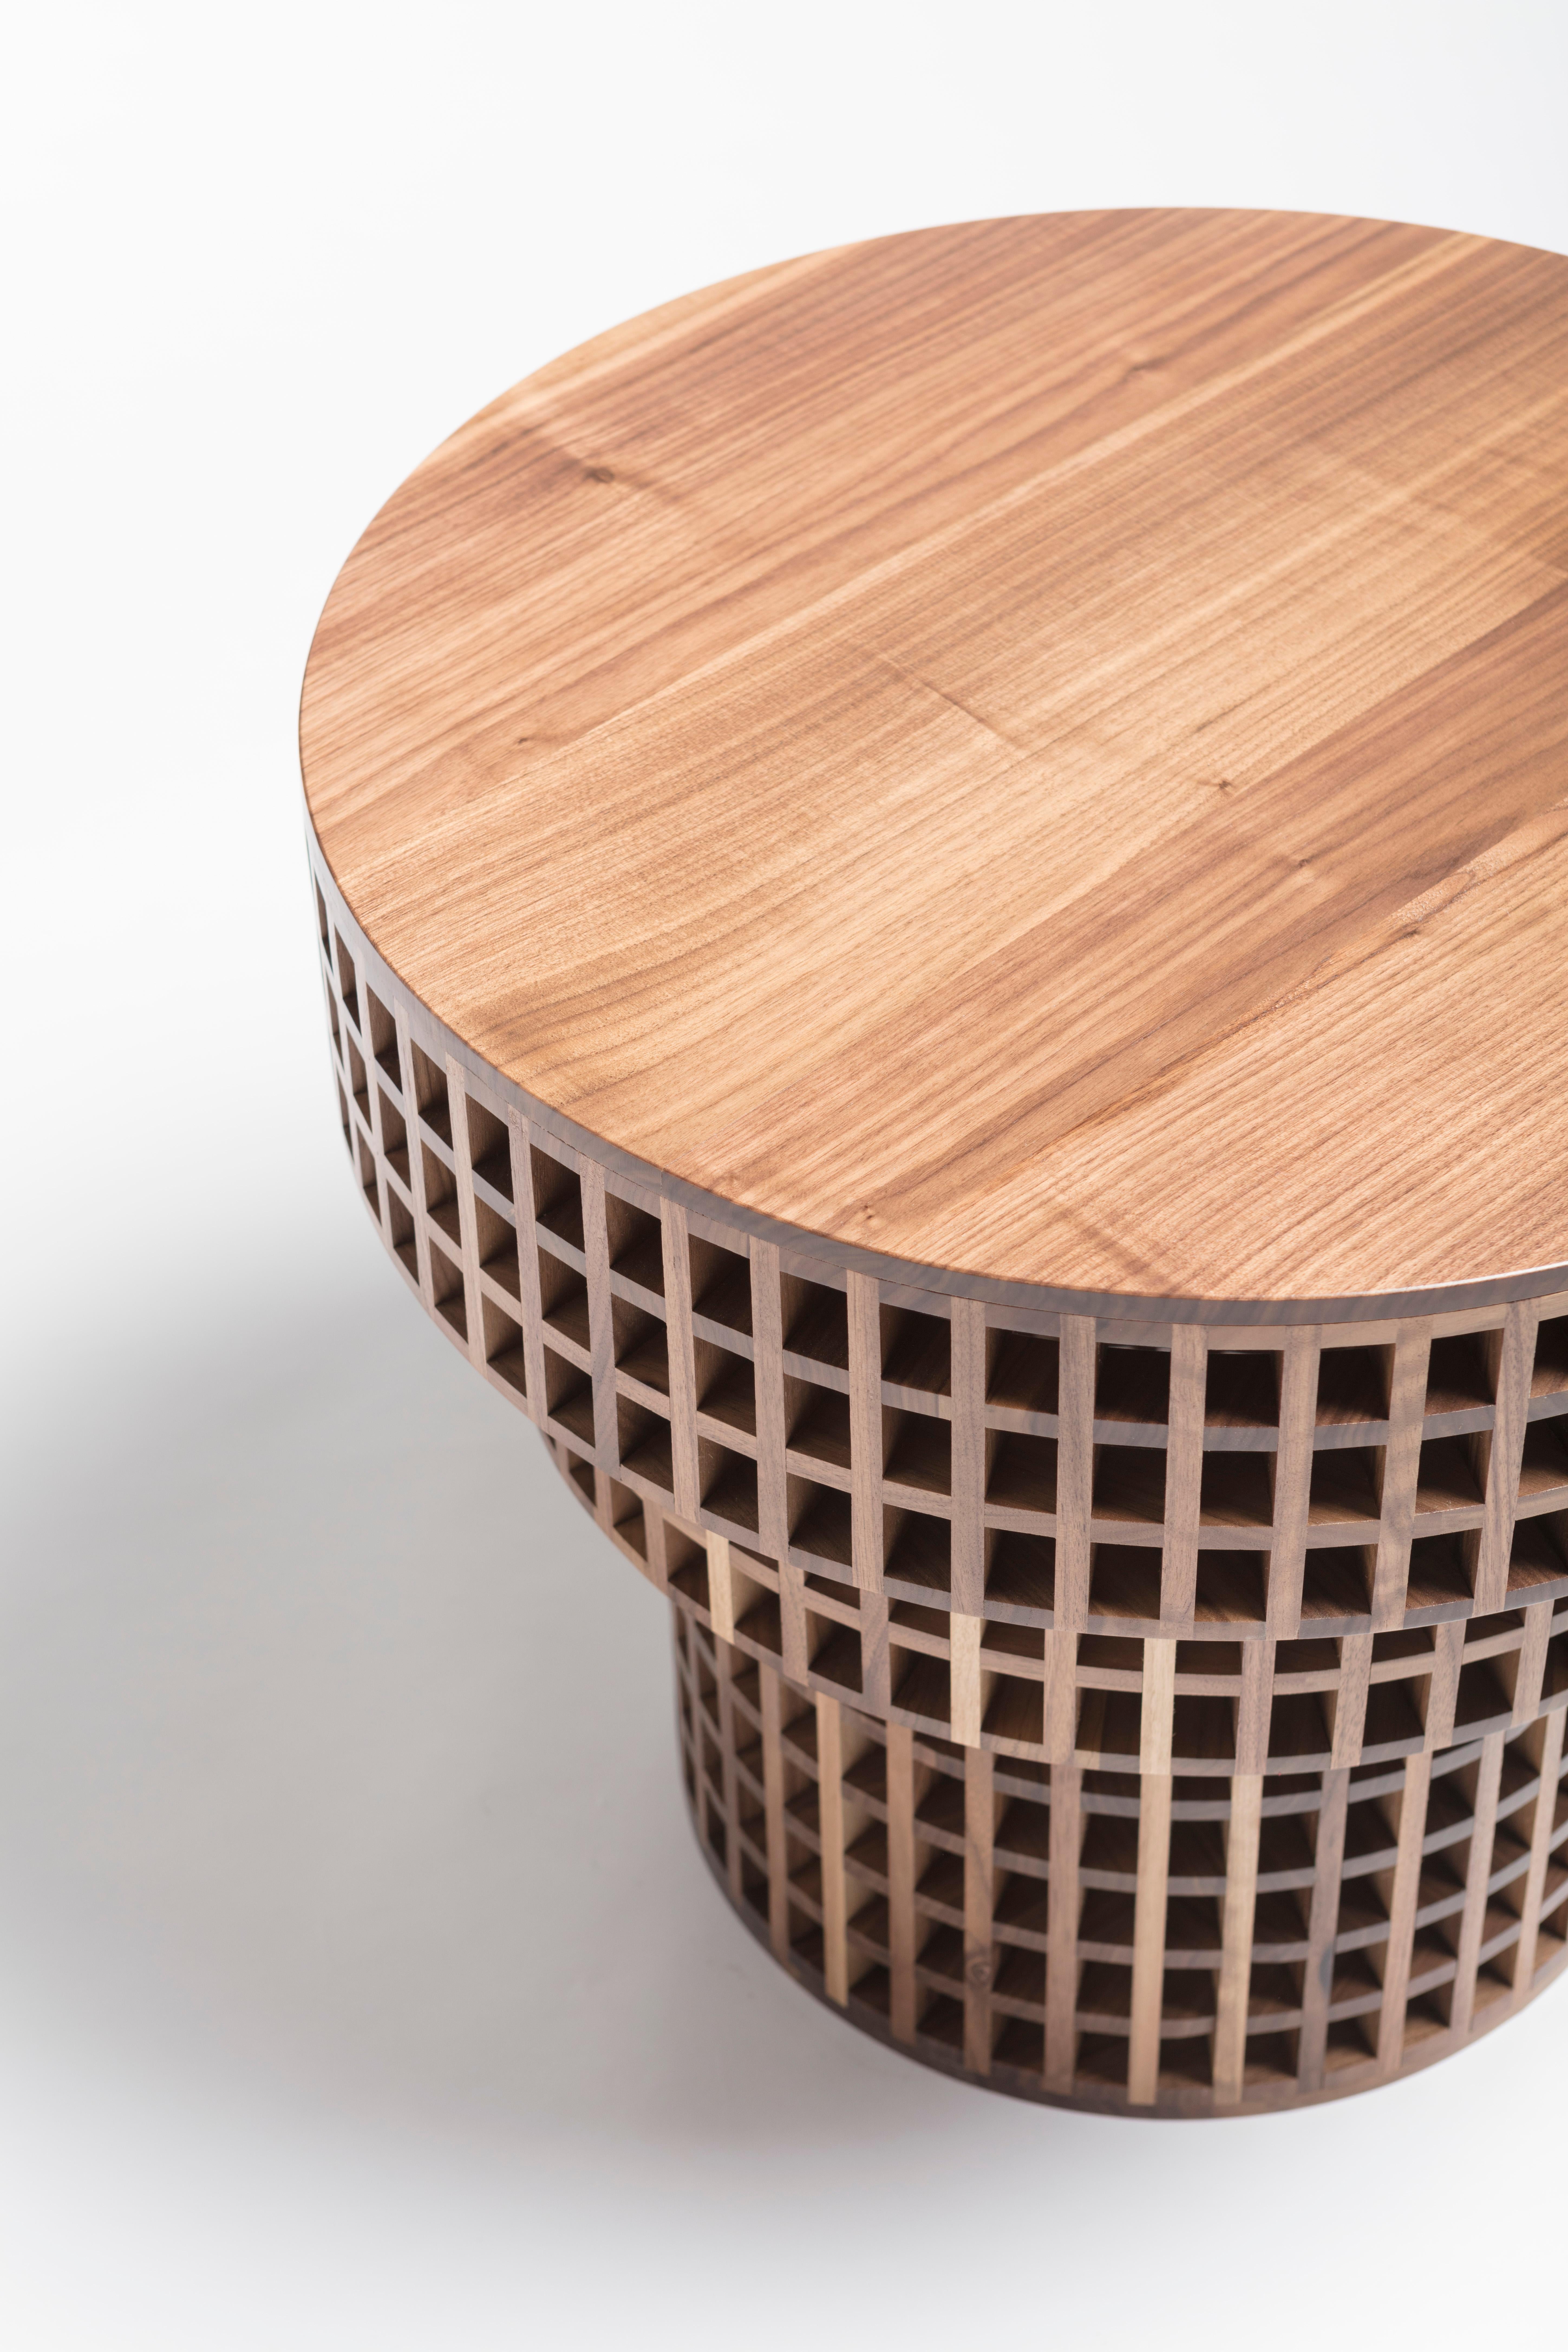 Post-Modern Carabottino Tavolino Side Table by Cara Davide